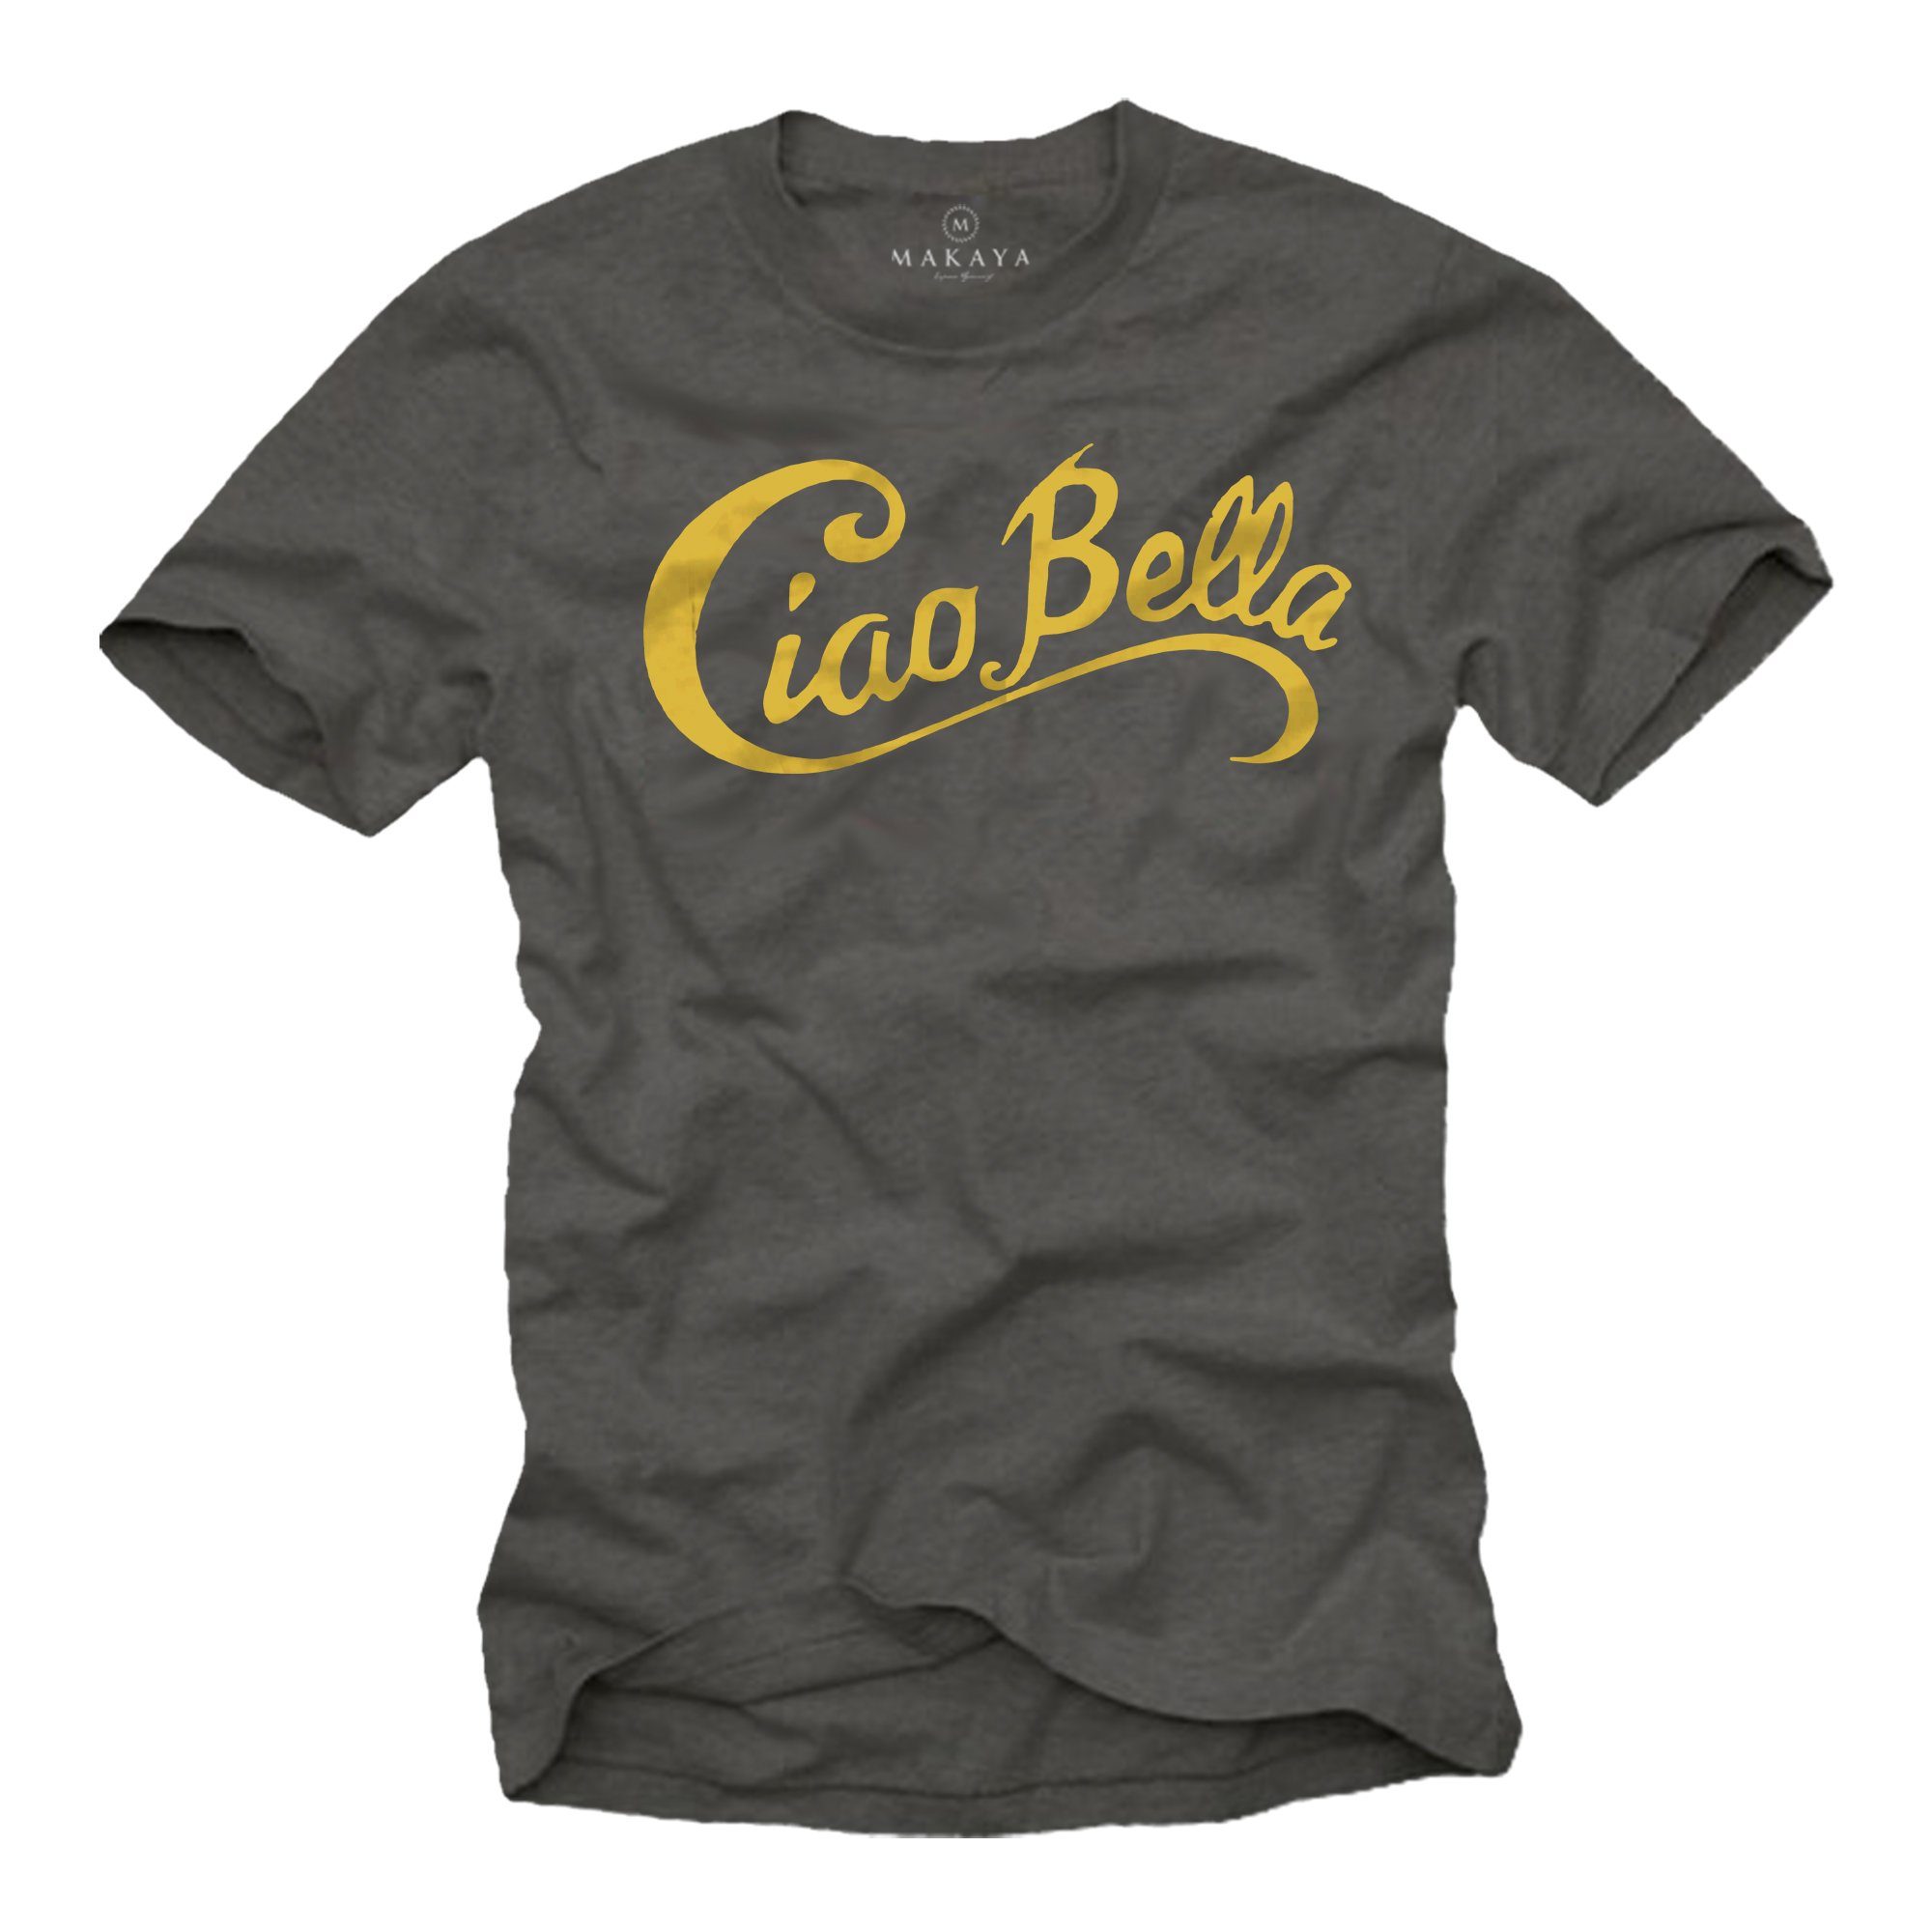 MAKAYA Print-Shirt Herren Italienischer Spruch Ciao Bella Coole Mode Italien Style Logo, Motiv Grau